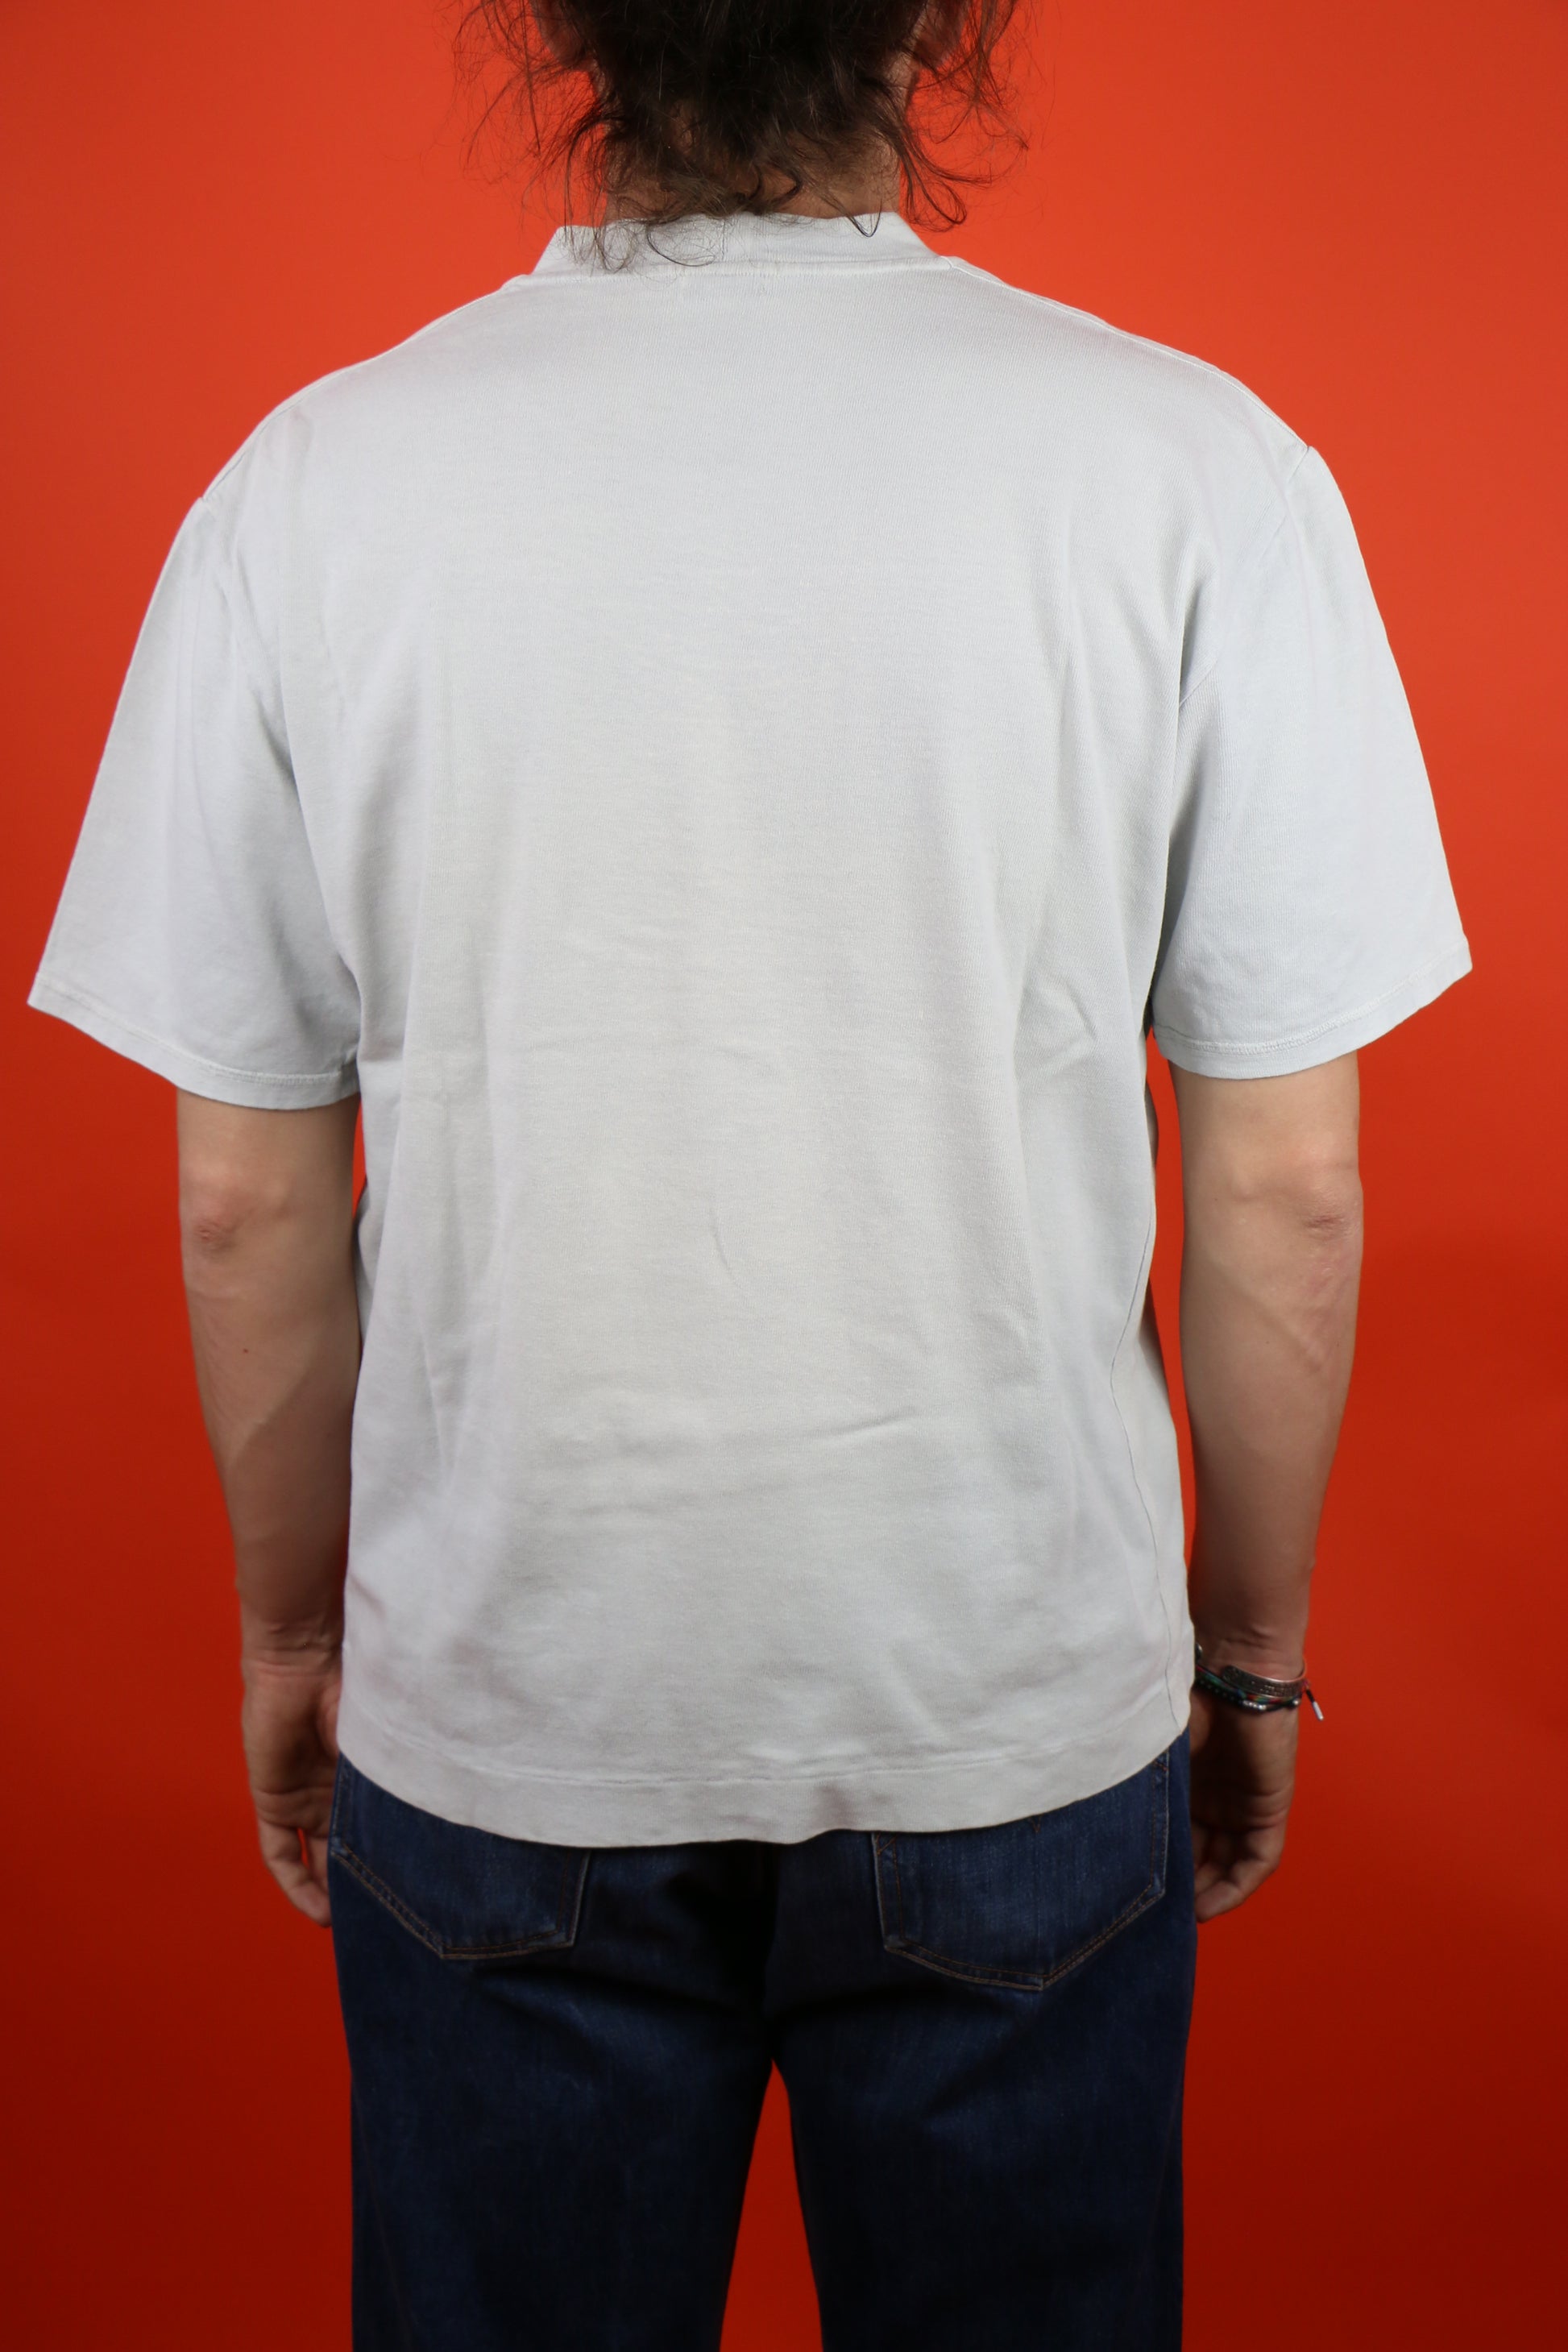 Stone Island White T-Shirt  - vintage clothing clochard92.com